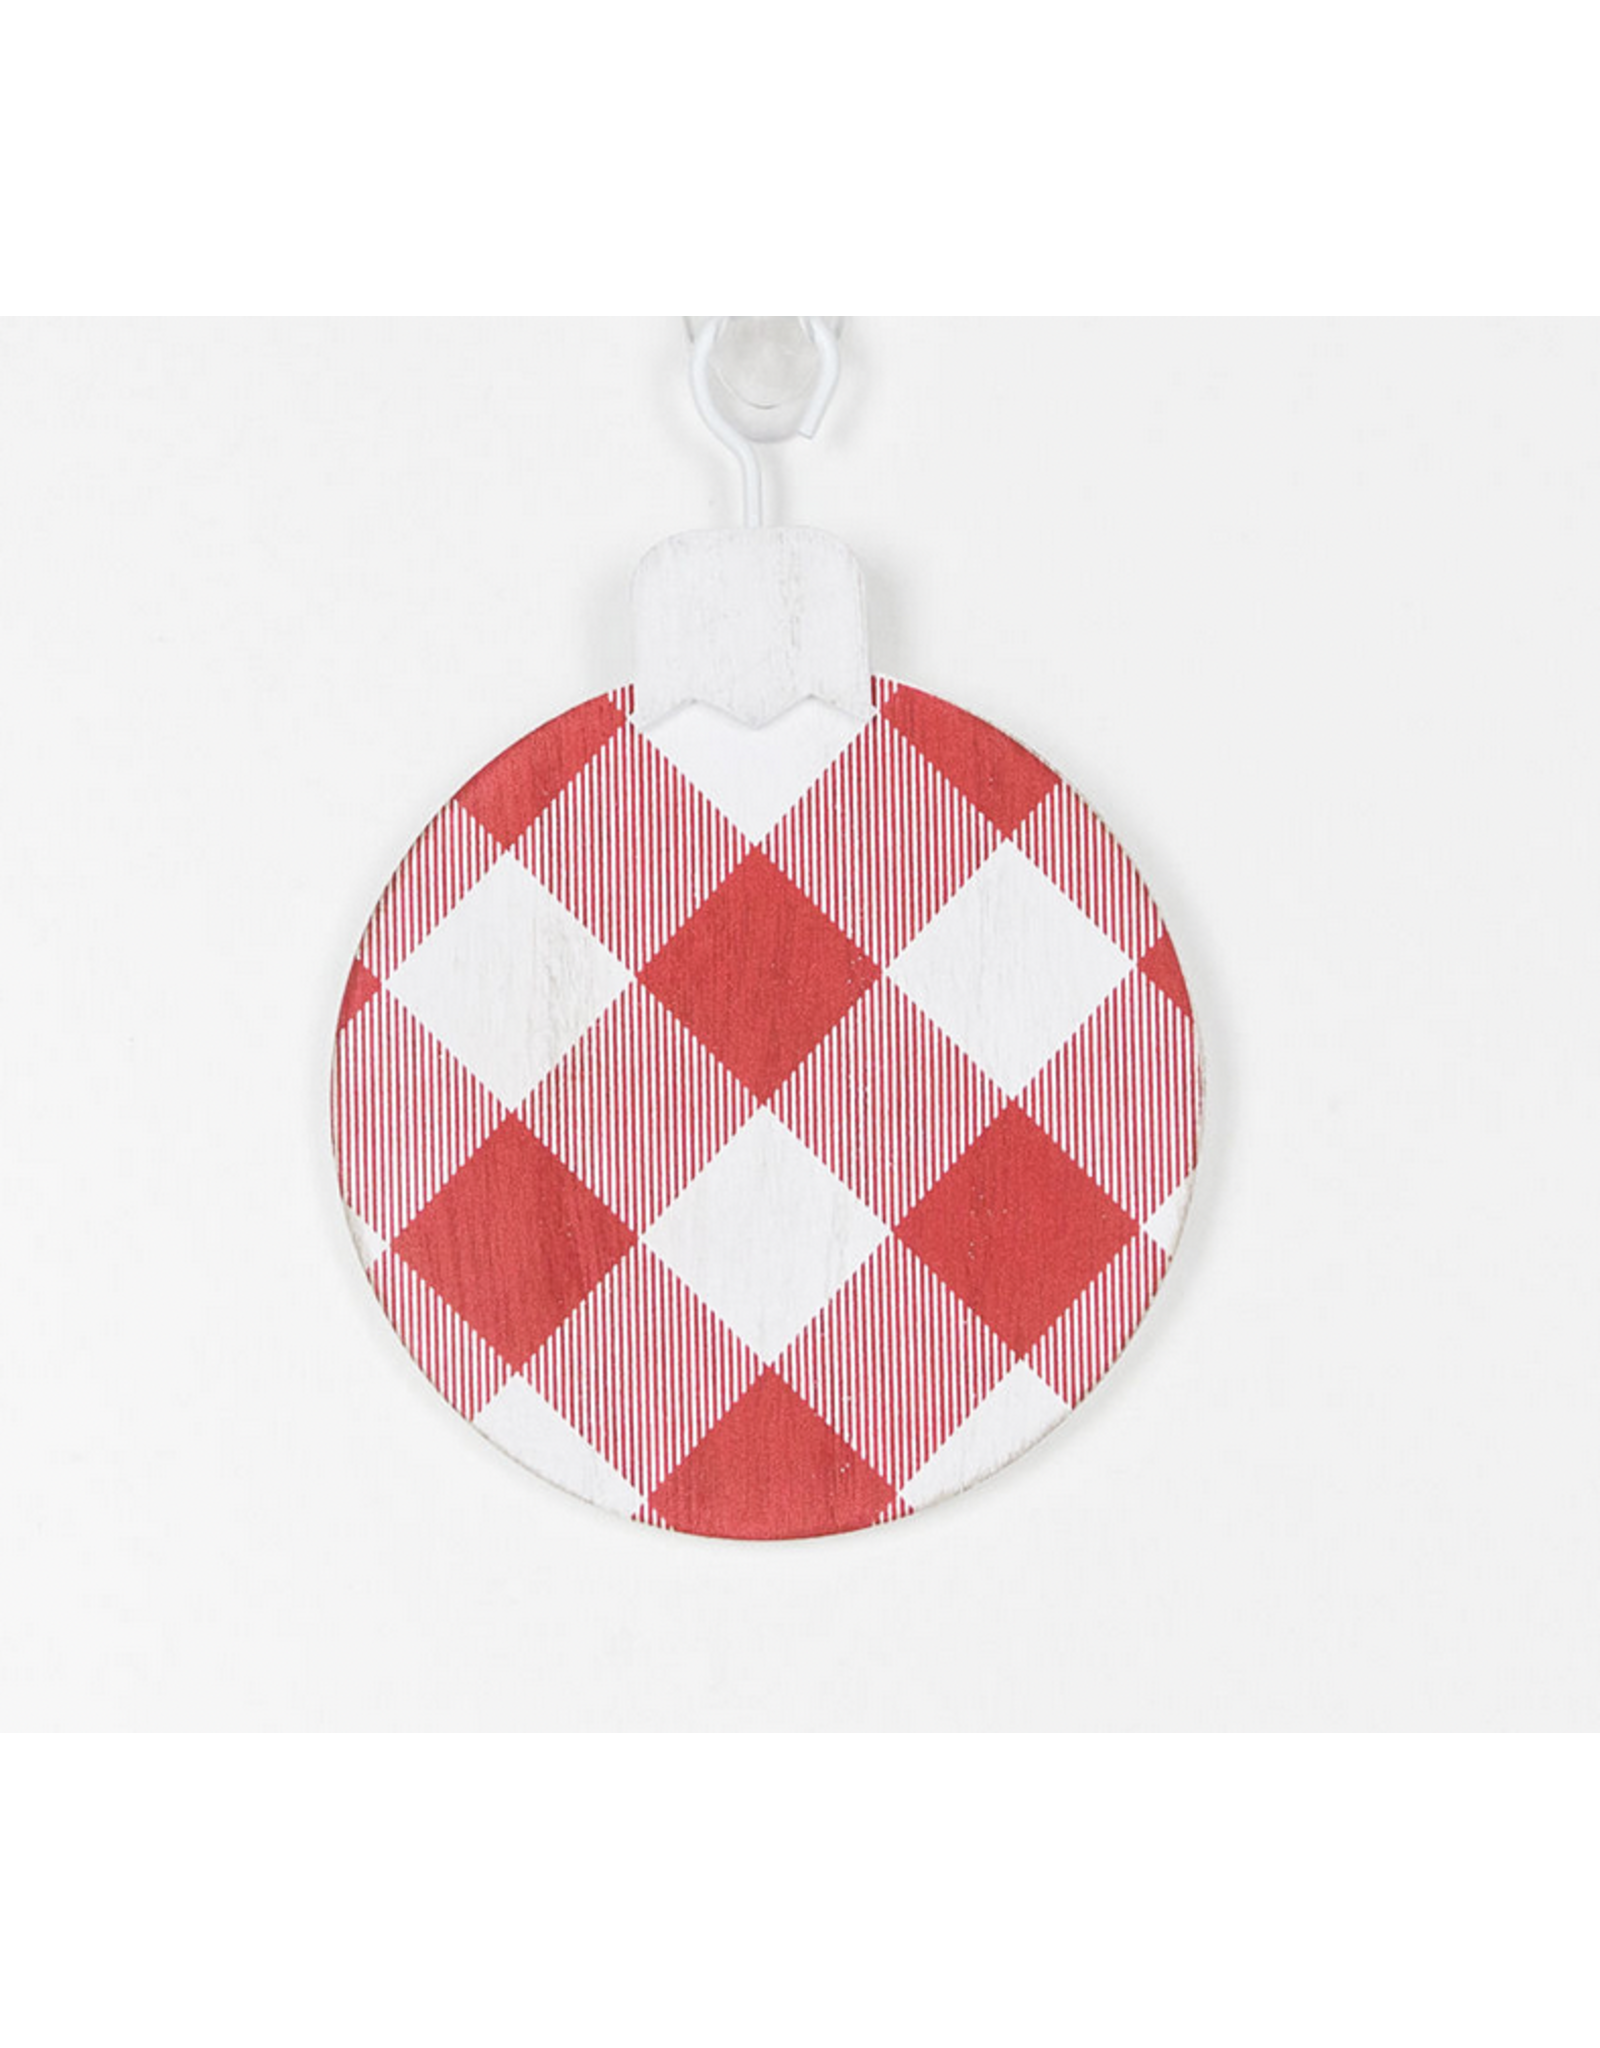 Adams & Co. Red & White Buffalo Check Ornament (with personalization)